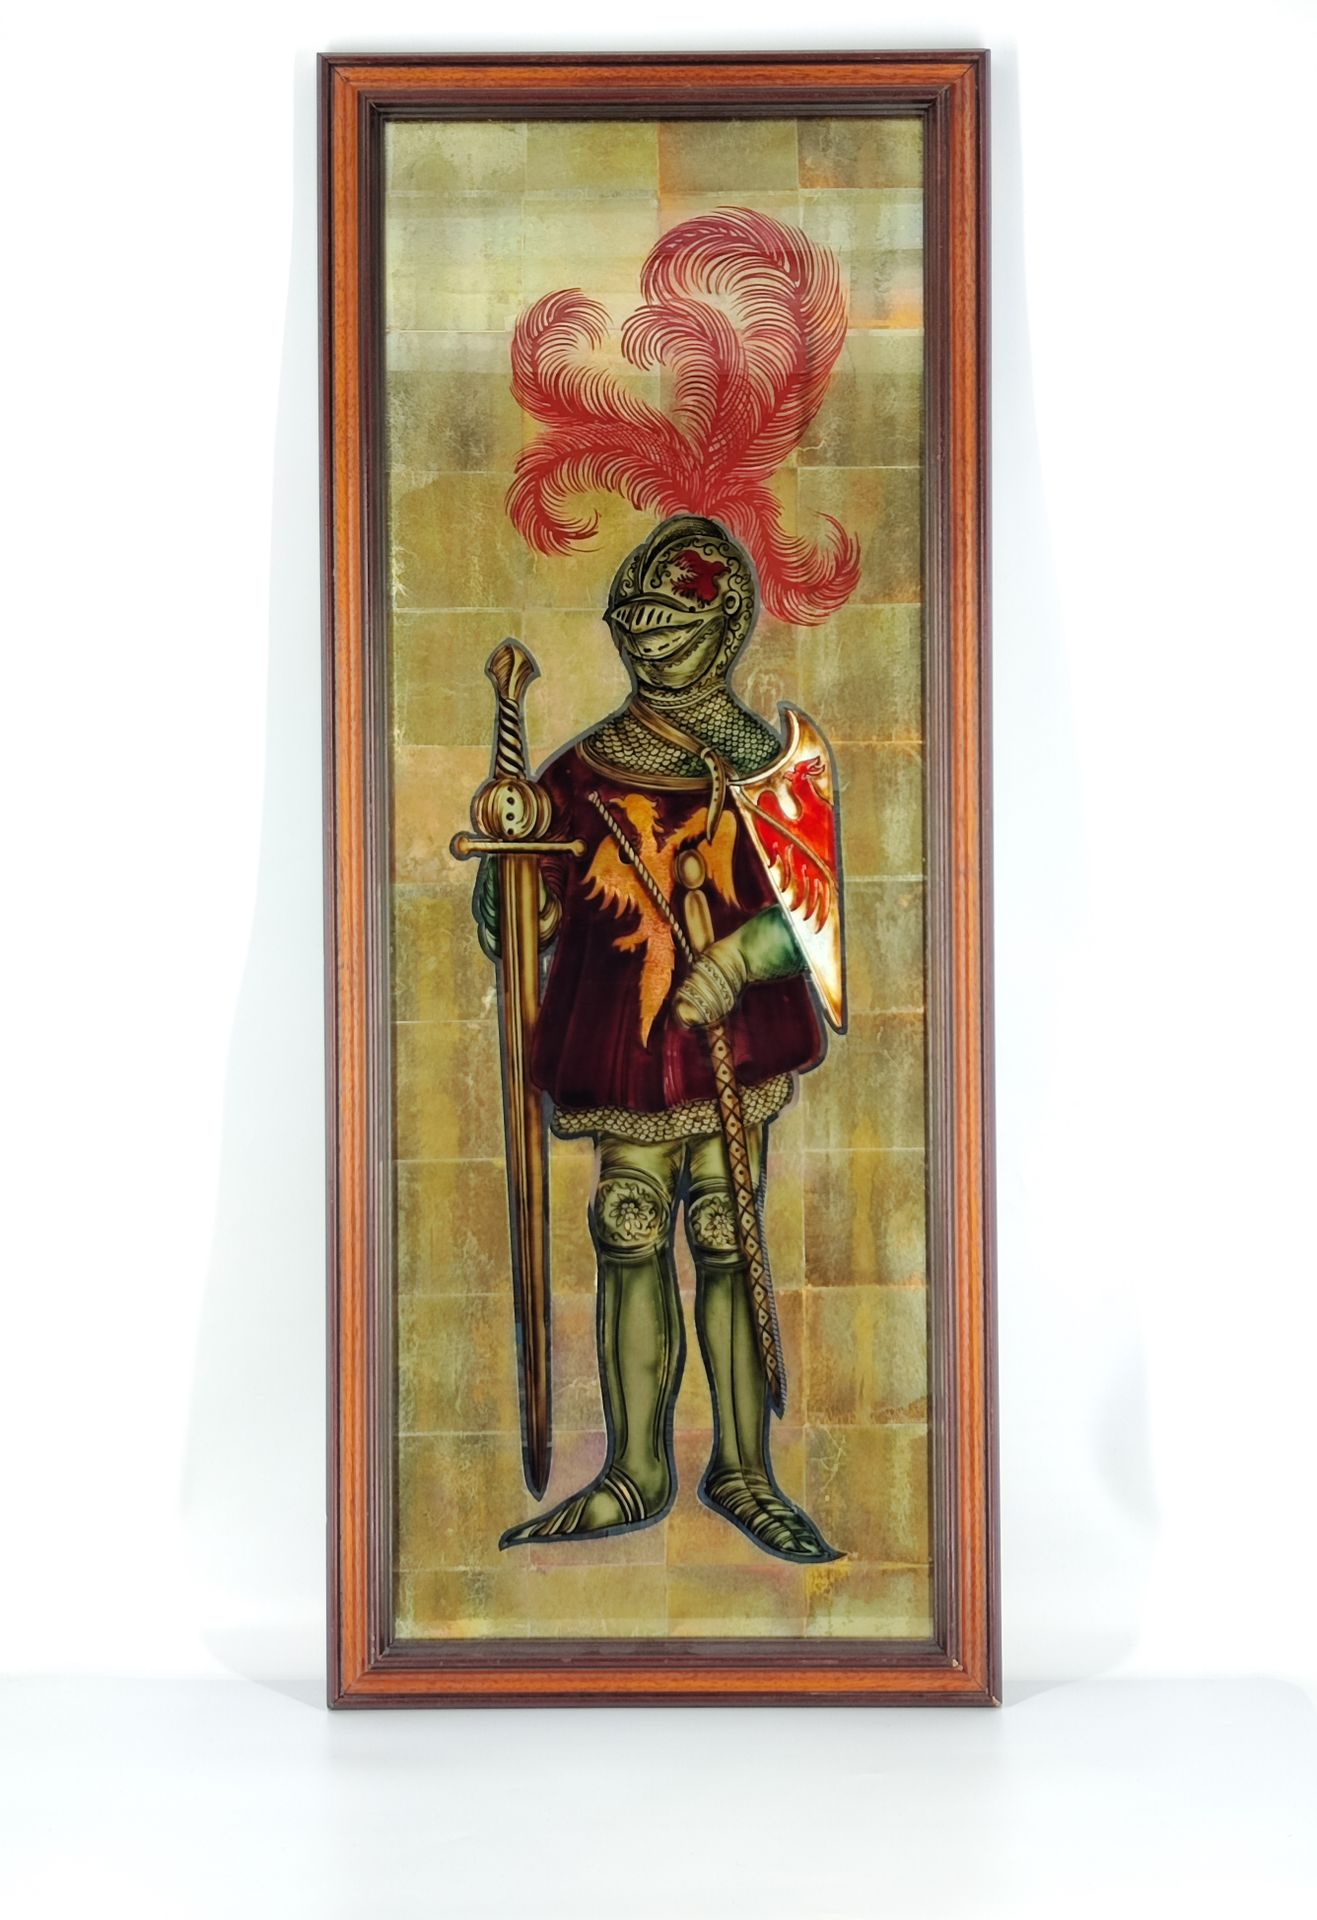 Null [手工艺术］
长方形蚀刻彩绘玻璃镜，描绘了一位身披盔甲的骑士，头戴羽毛头盔，手持盾牌。
法国作品，约 1980 年。
118 x 48 厘米，带镜框。&hellip;